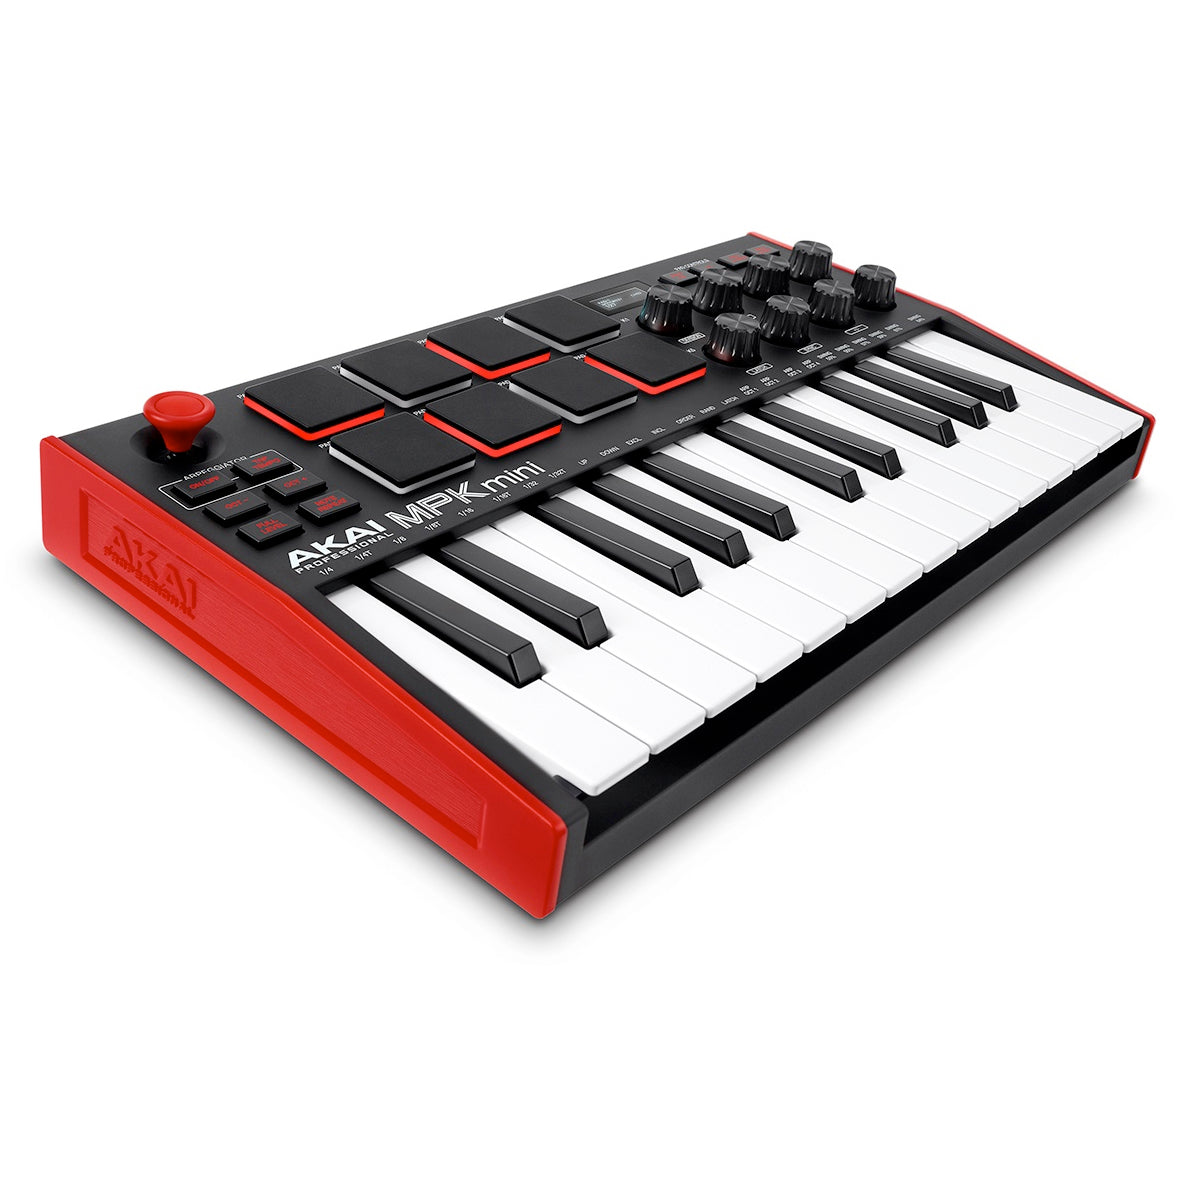 Akai Professional MPK Mini MKIII 25-Key MIDI Controller (Original)